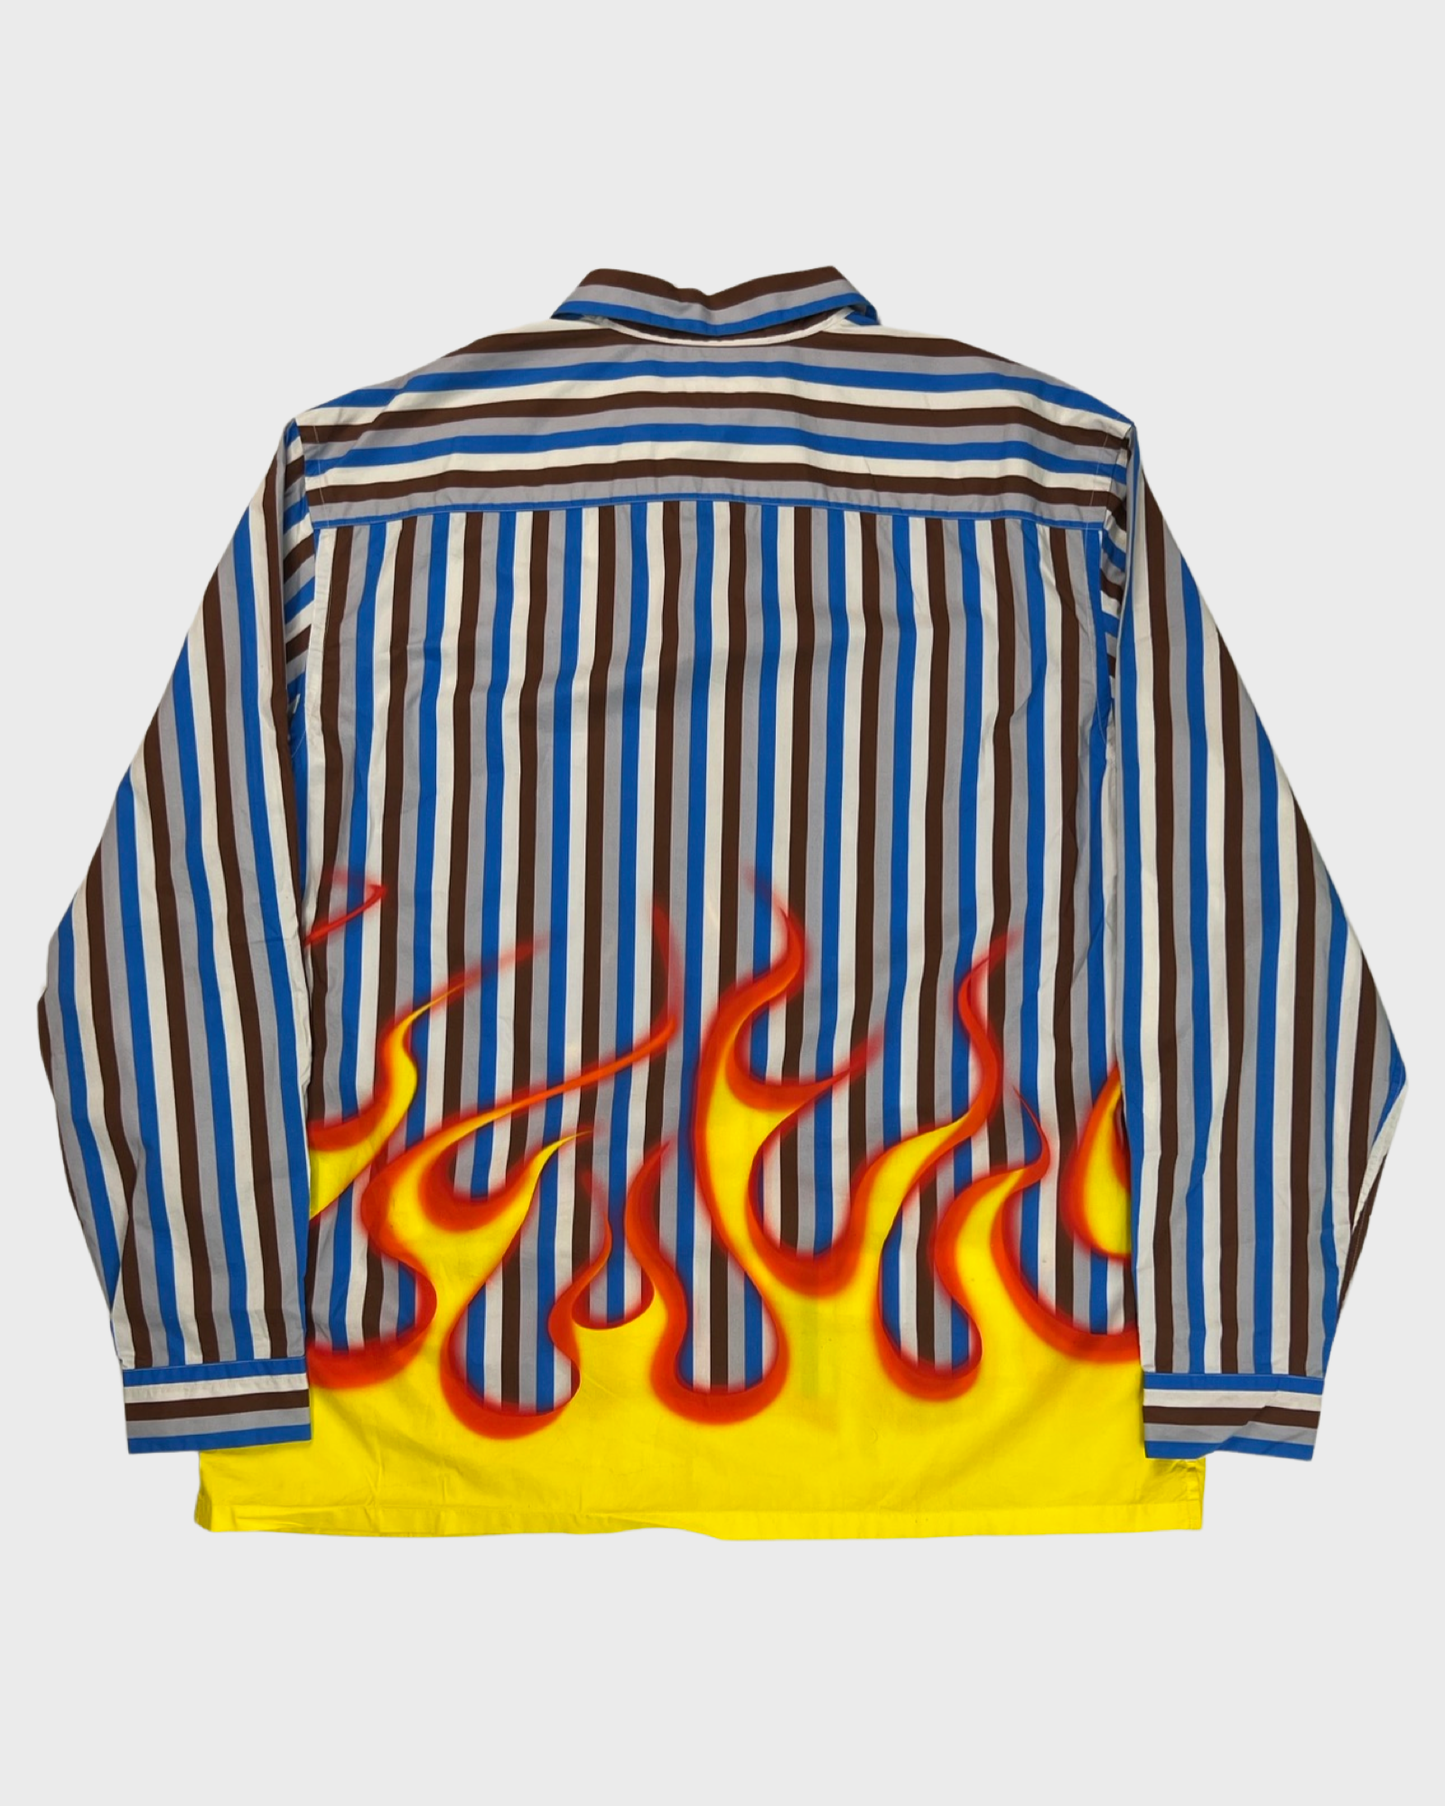 Prada 1of1 Flame longsleeve button up Shirt SZ:L